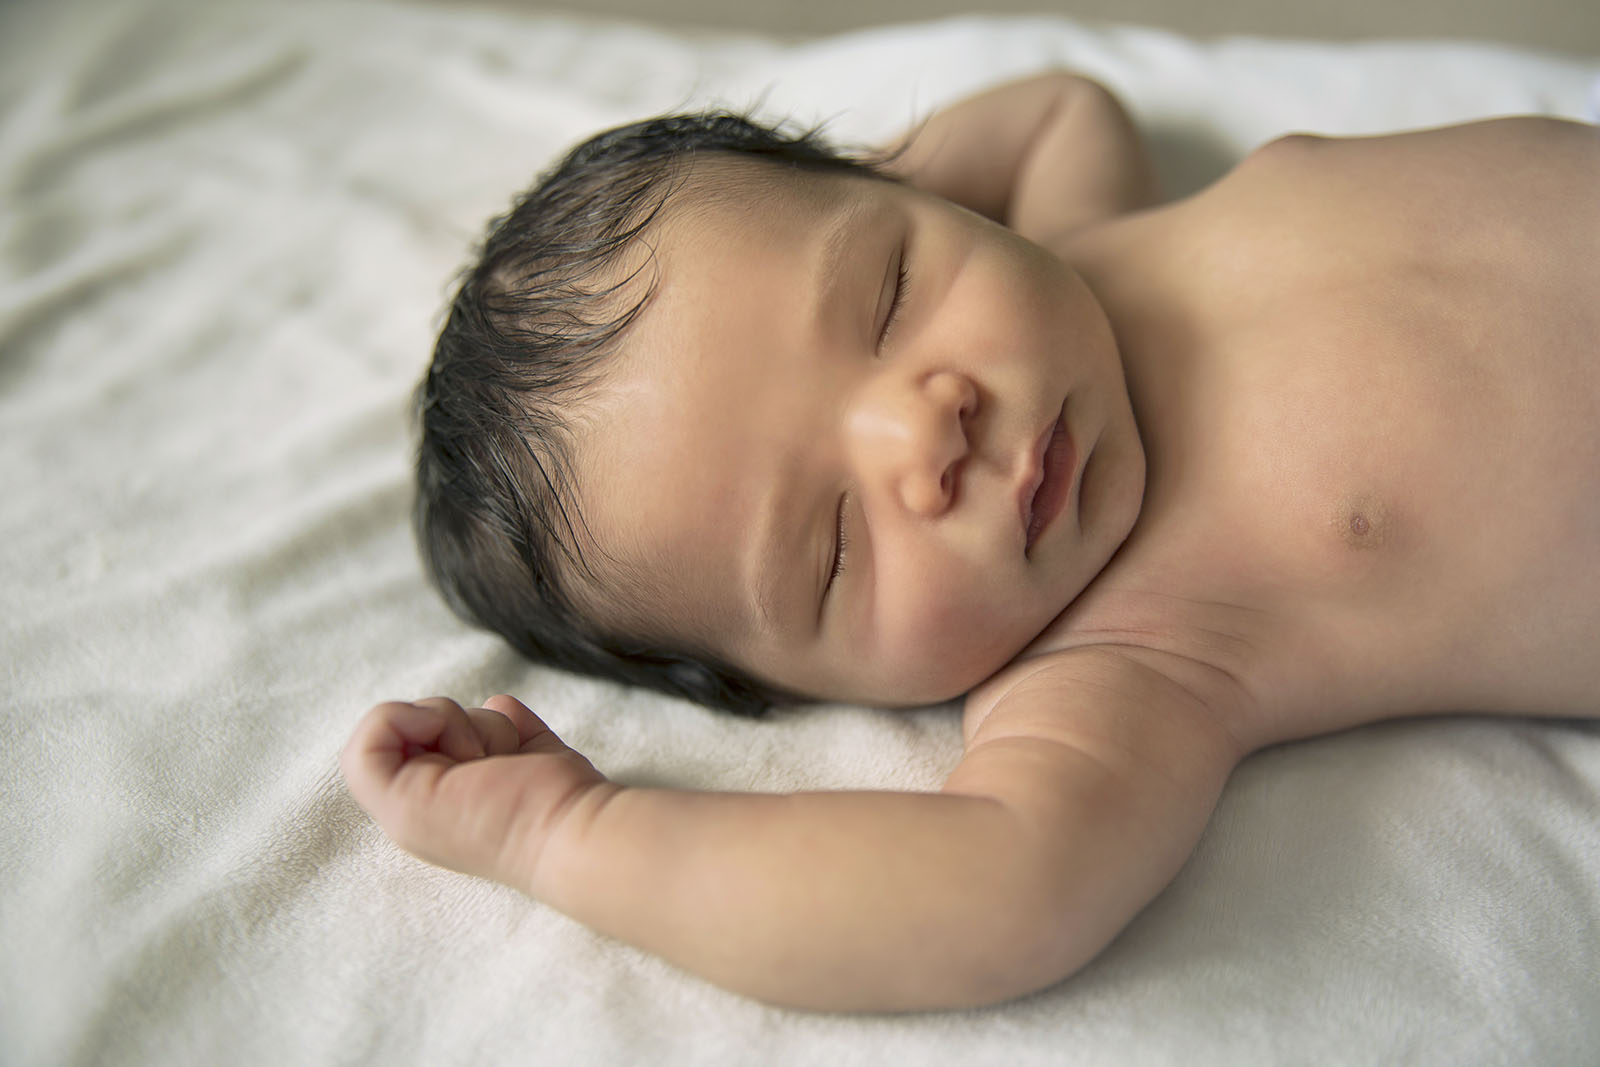 in-home-newborn-photographer